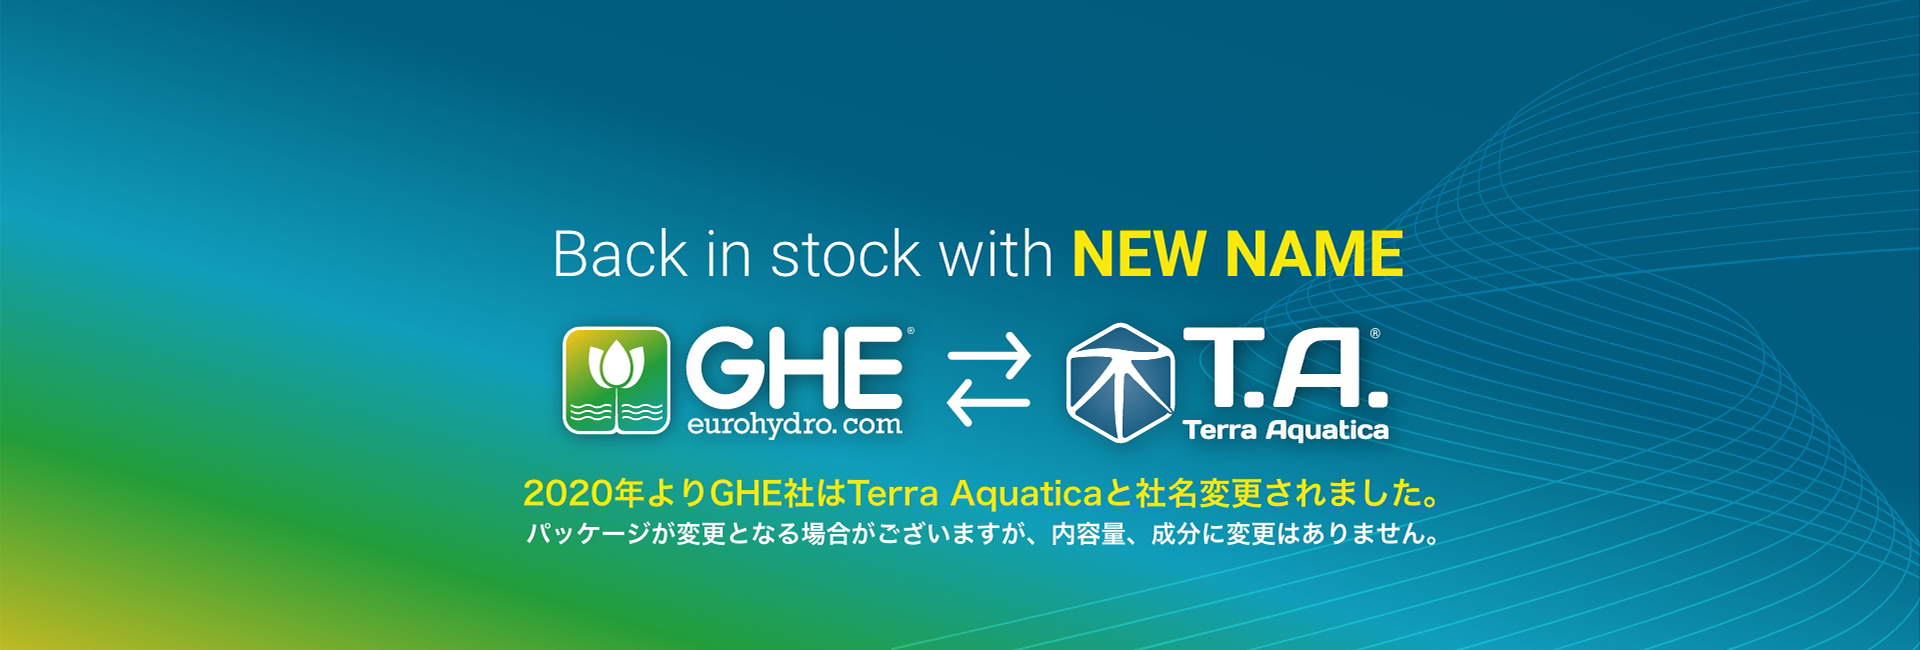 Back in stock with NEW NAME － GHE⇔T.A. － 2020年よりGHE社はTerra Aquaticaと社名変更されました。パッケージが変更となる場合がございますが、内容量、成分に変更はありません